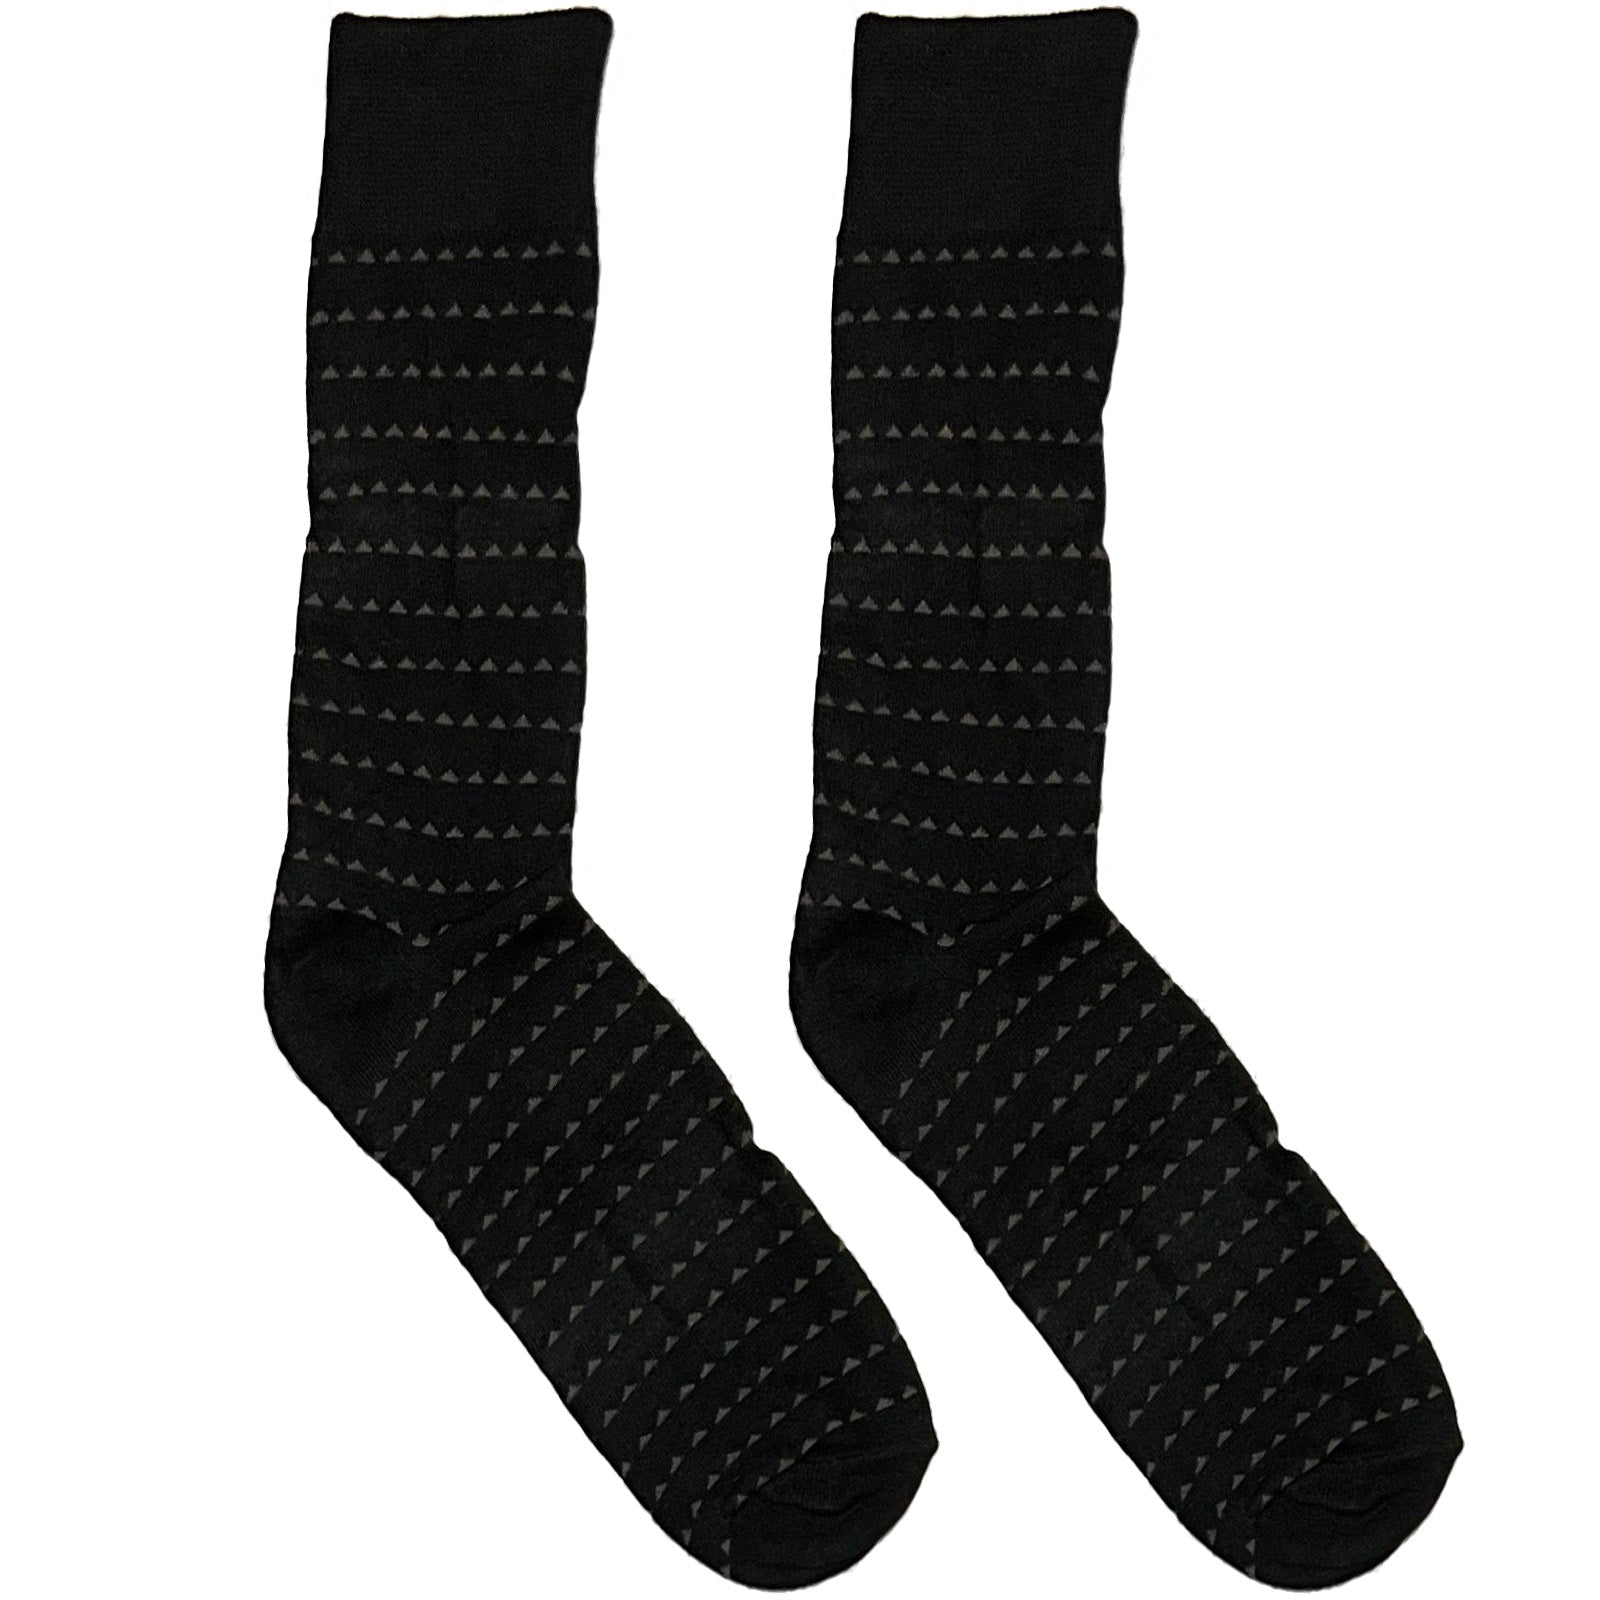 Black And Grey Triangle Socks